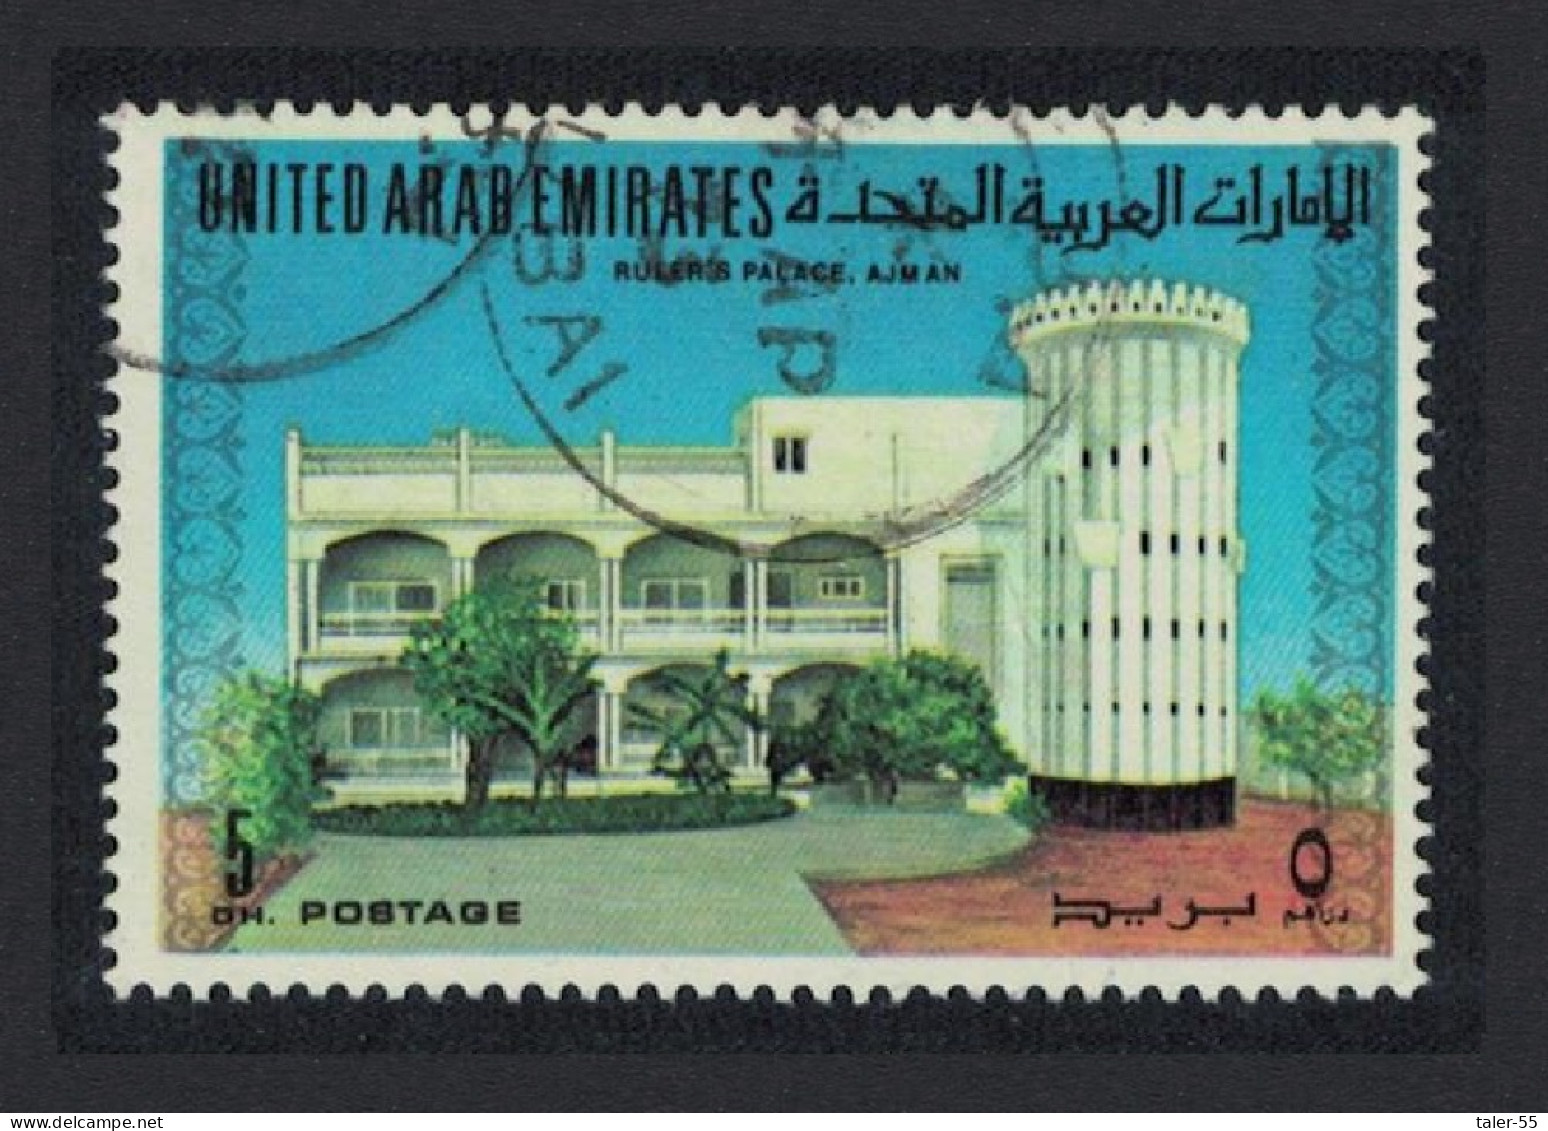 United Arab Emirates Ruler's Palace Ajman 5 Dh 1973 MNH SG#11 MI#11 - Ver. Arab. Emirate